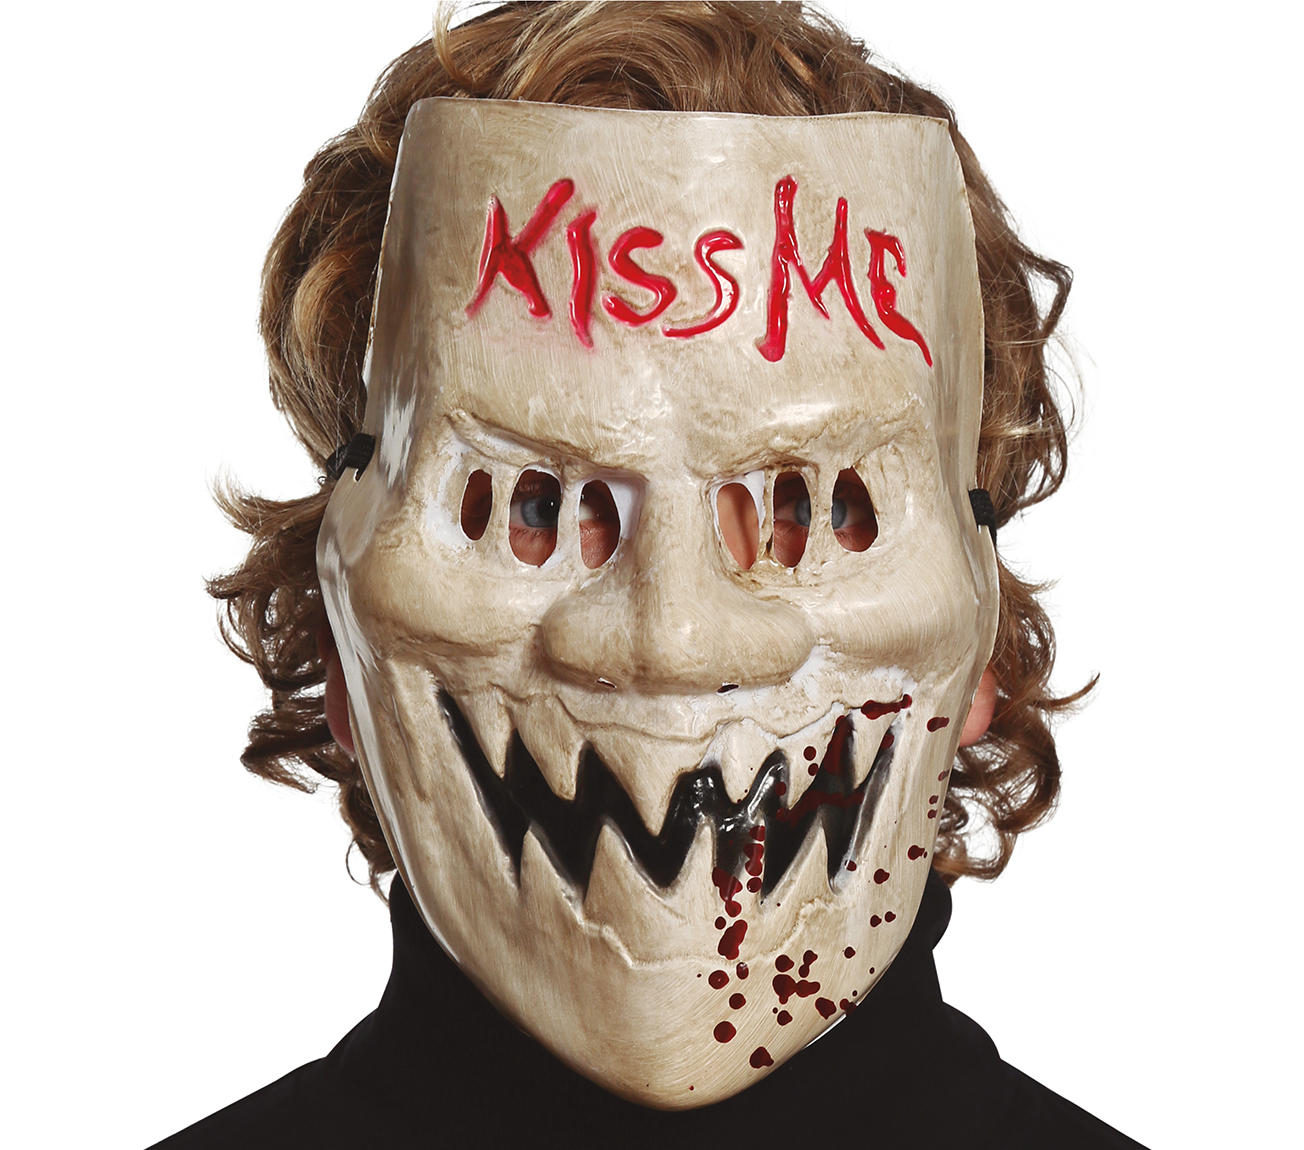 Maska - Kiss me (Očista)